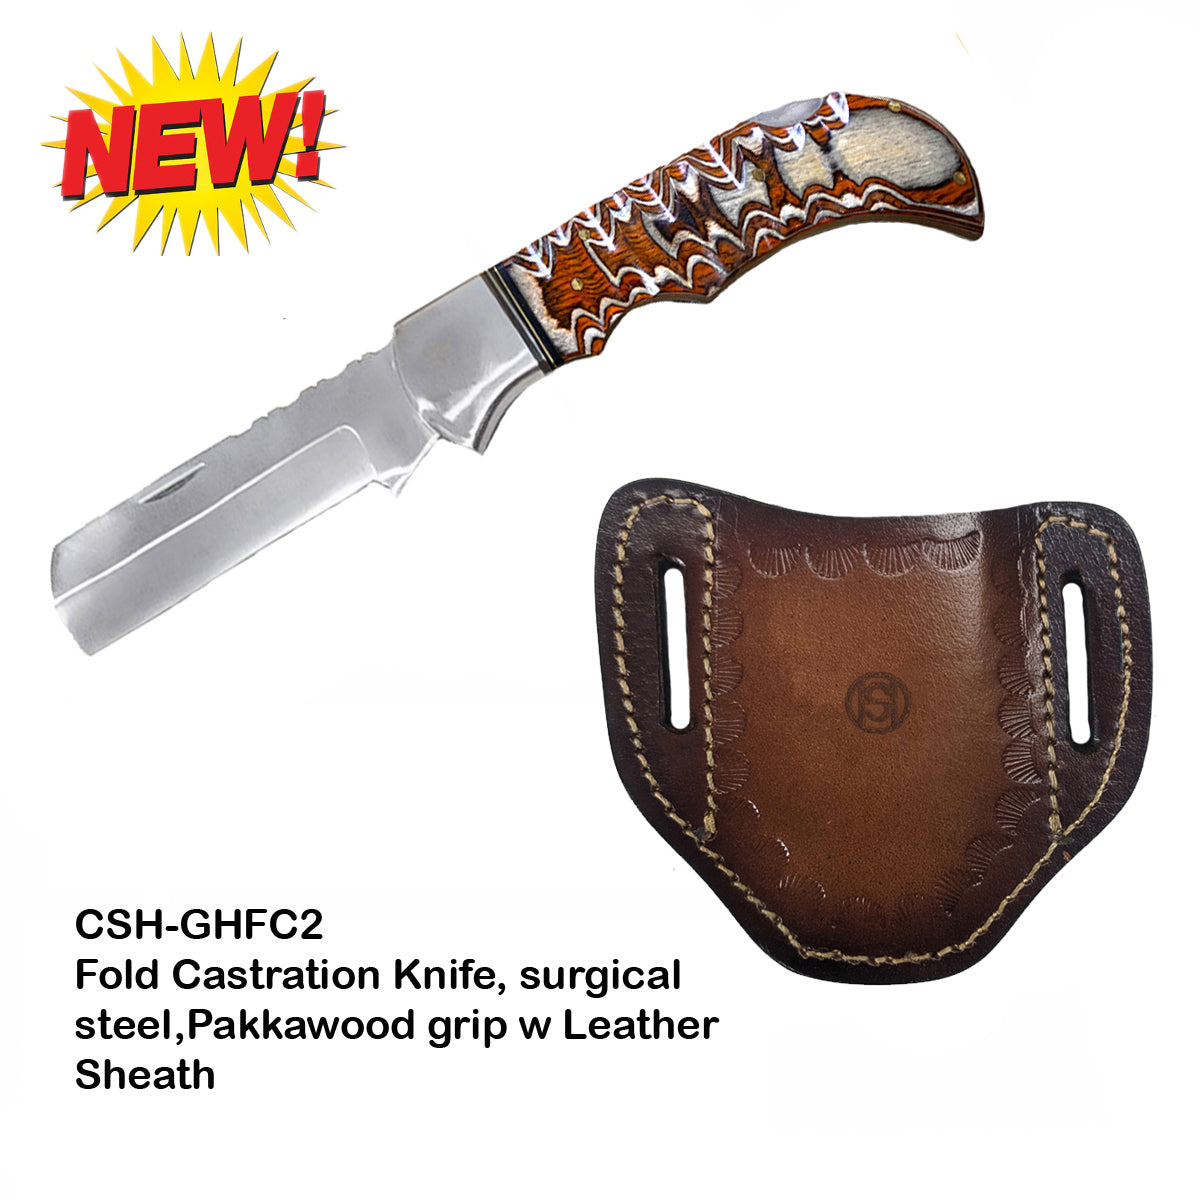 Circle SH Folding Castration Knife w/Leather Sheath - Natural Pakkawood